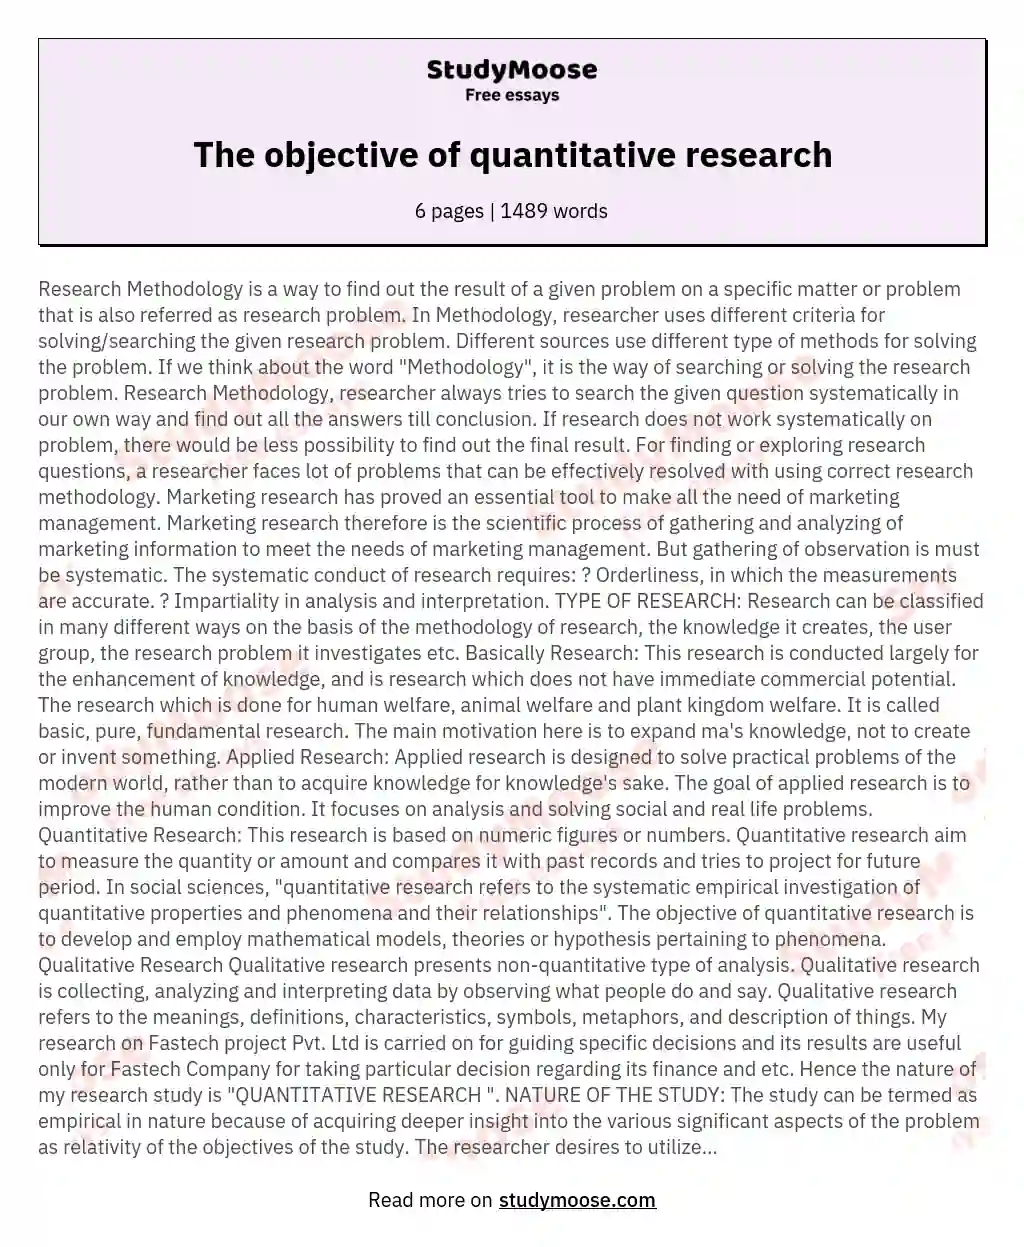 The objective of quantitative research essay